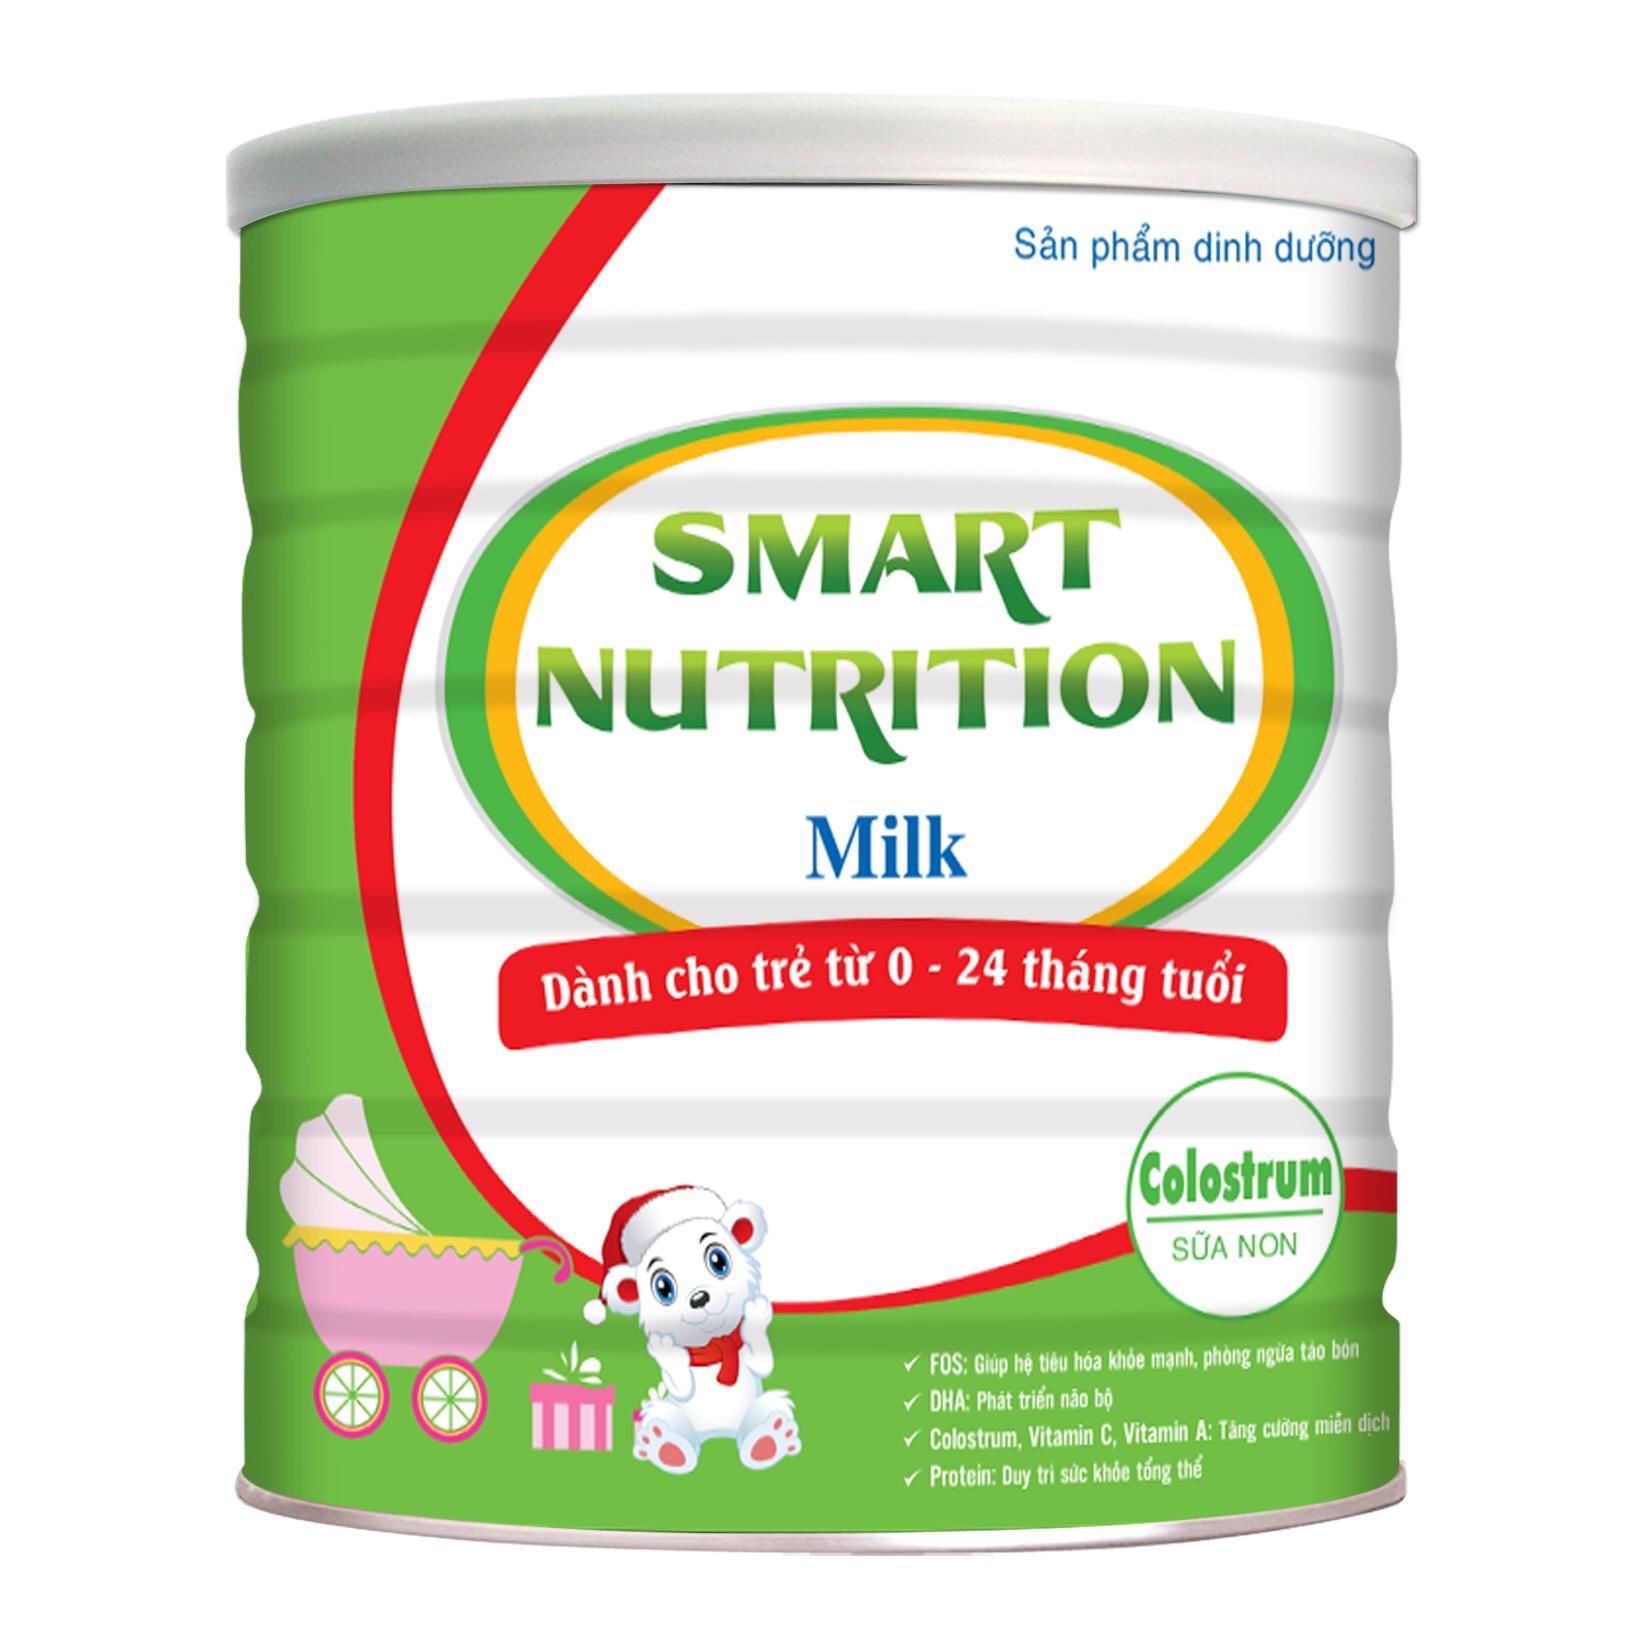 SMART NUTRITION MILK 900g